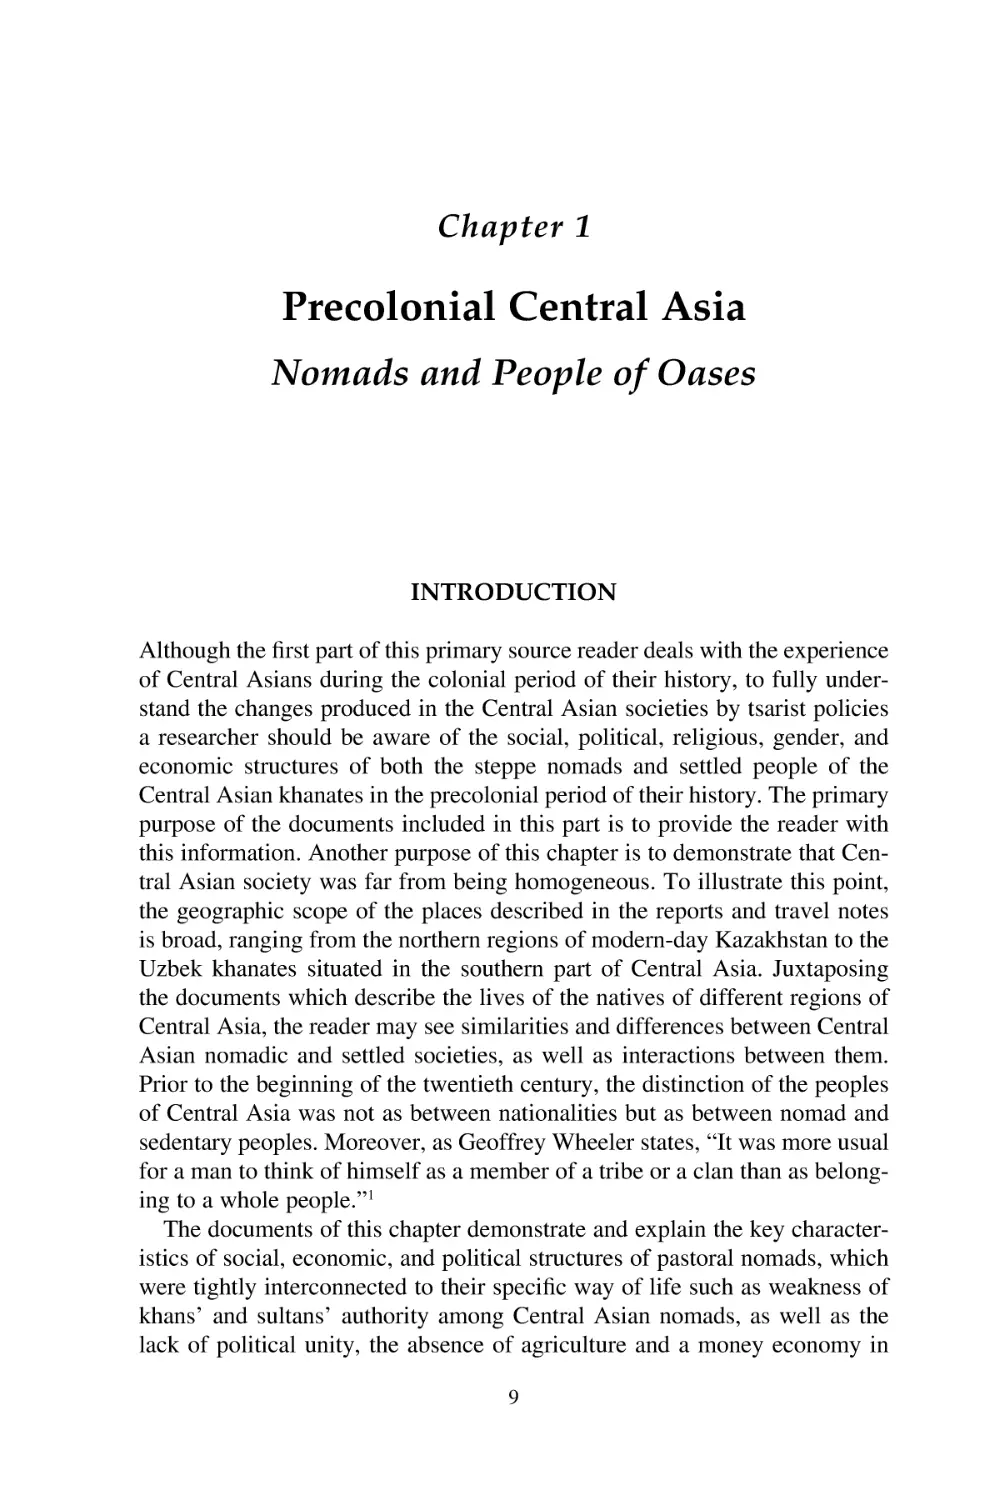 1. Precolonial Central Asia